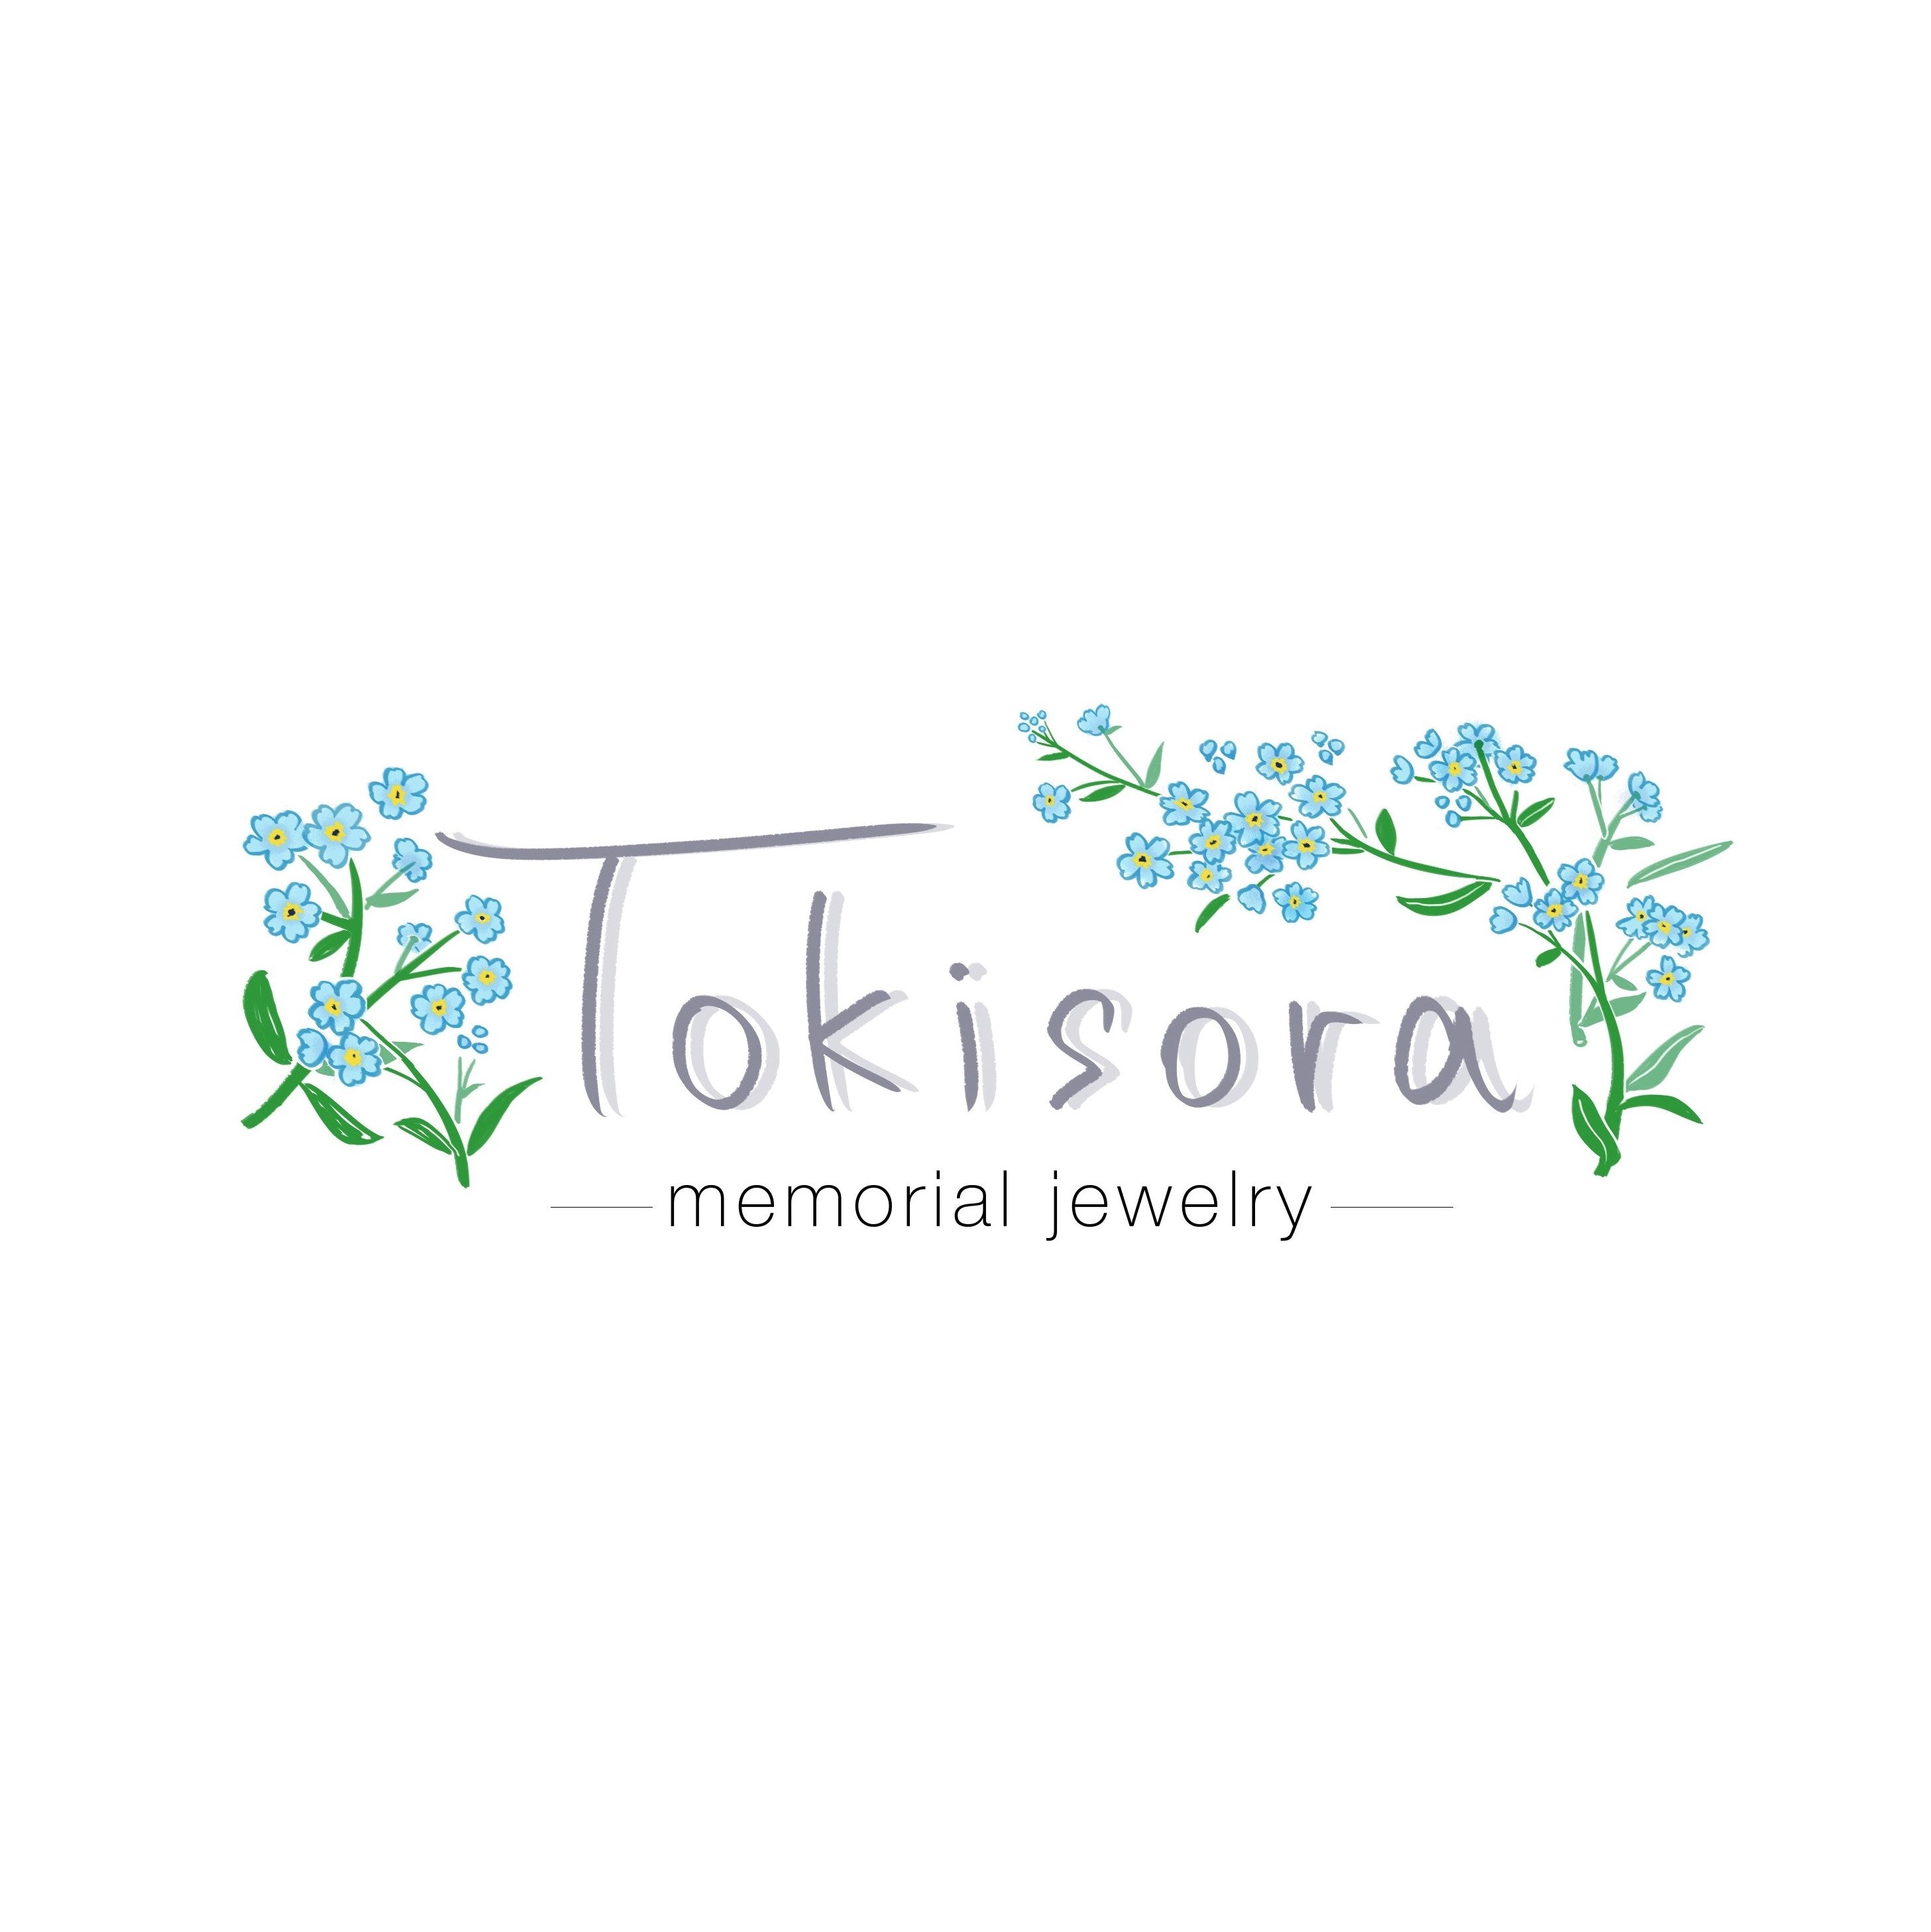 Tokisora memorial jewerly のロゴマーク